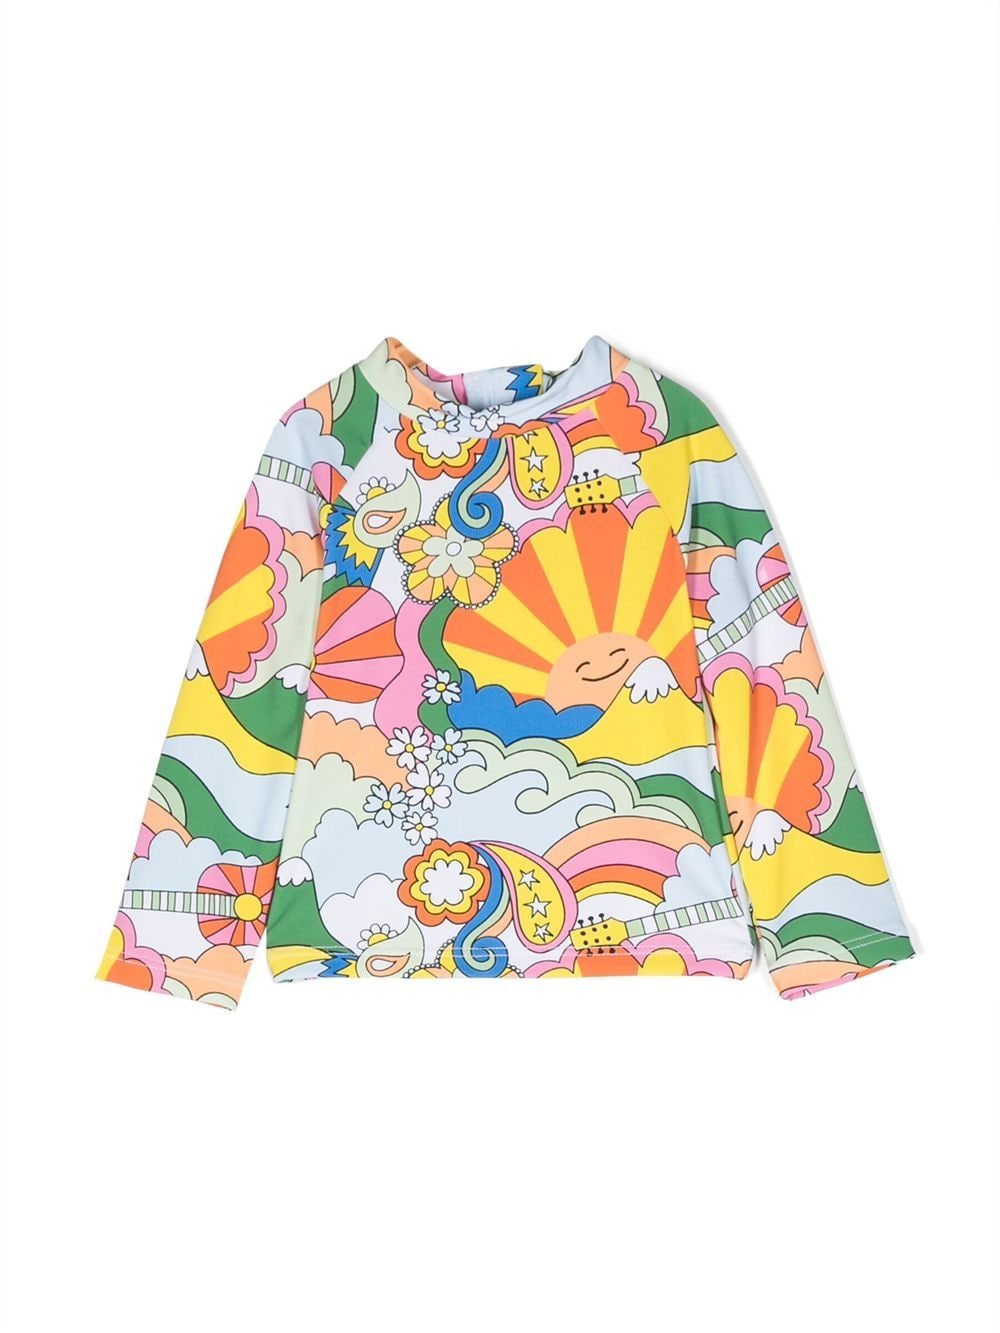 Multicolored swim t-shirt for baby girls